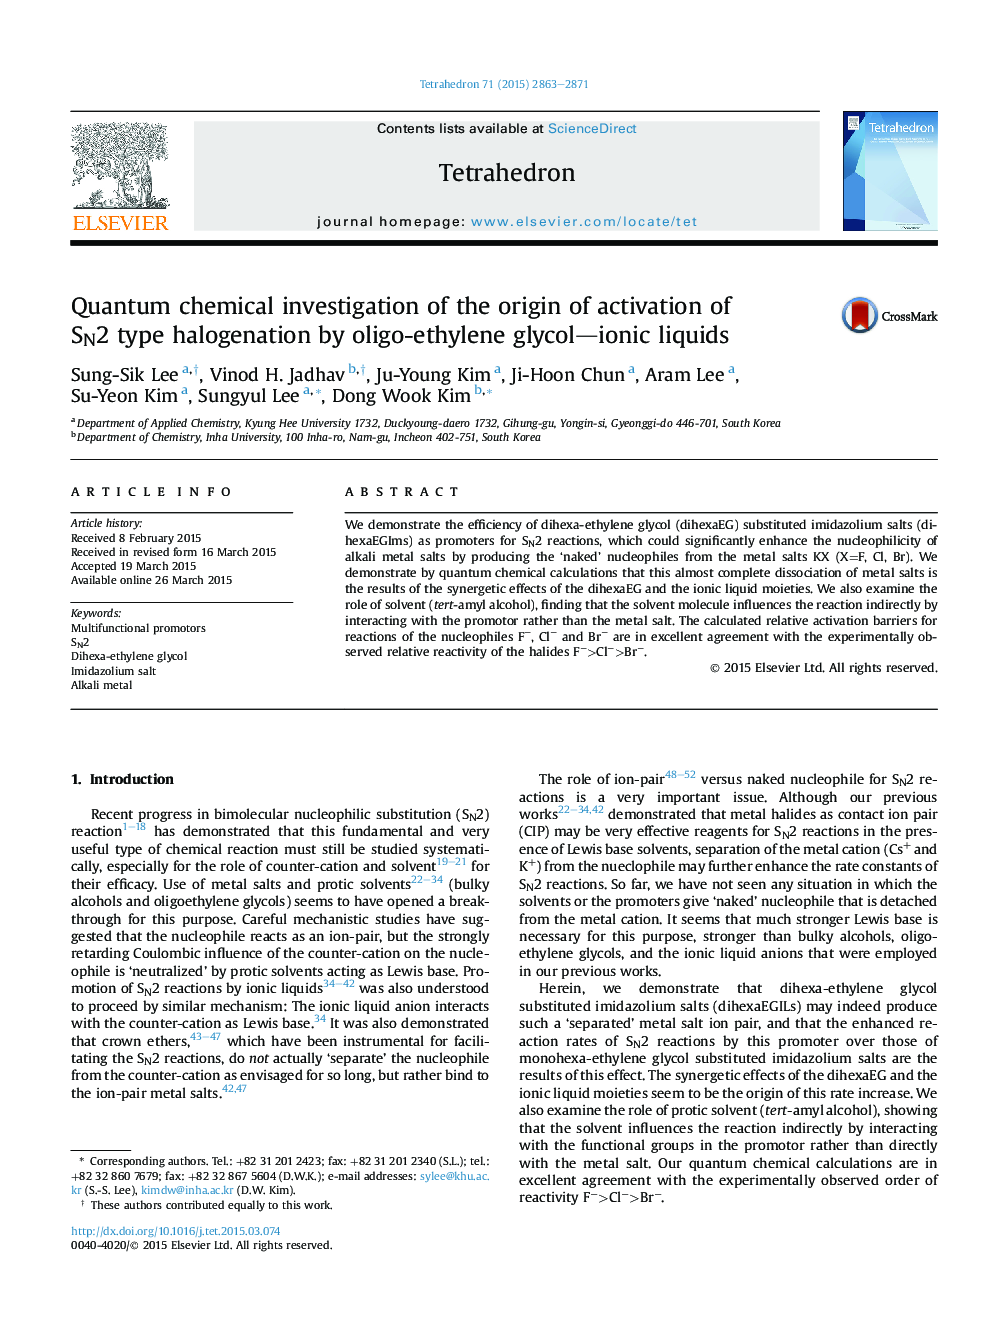 Quantum chemical investigation of the origin of activation of SN2Â type halogenation by oligo-ethylene glycol-ionic liquids